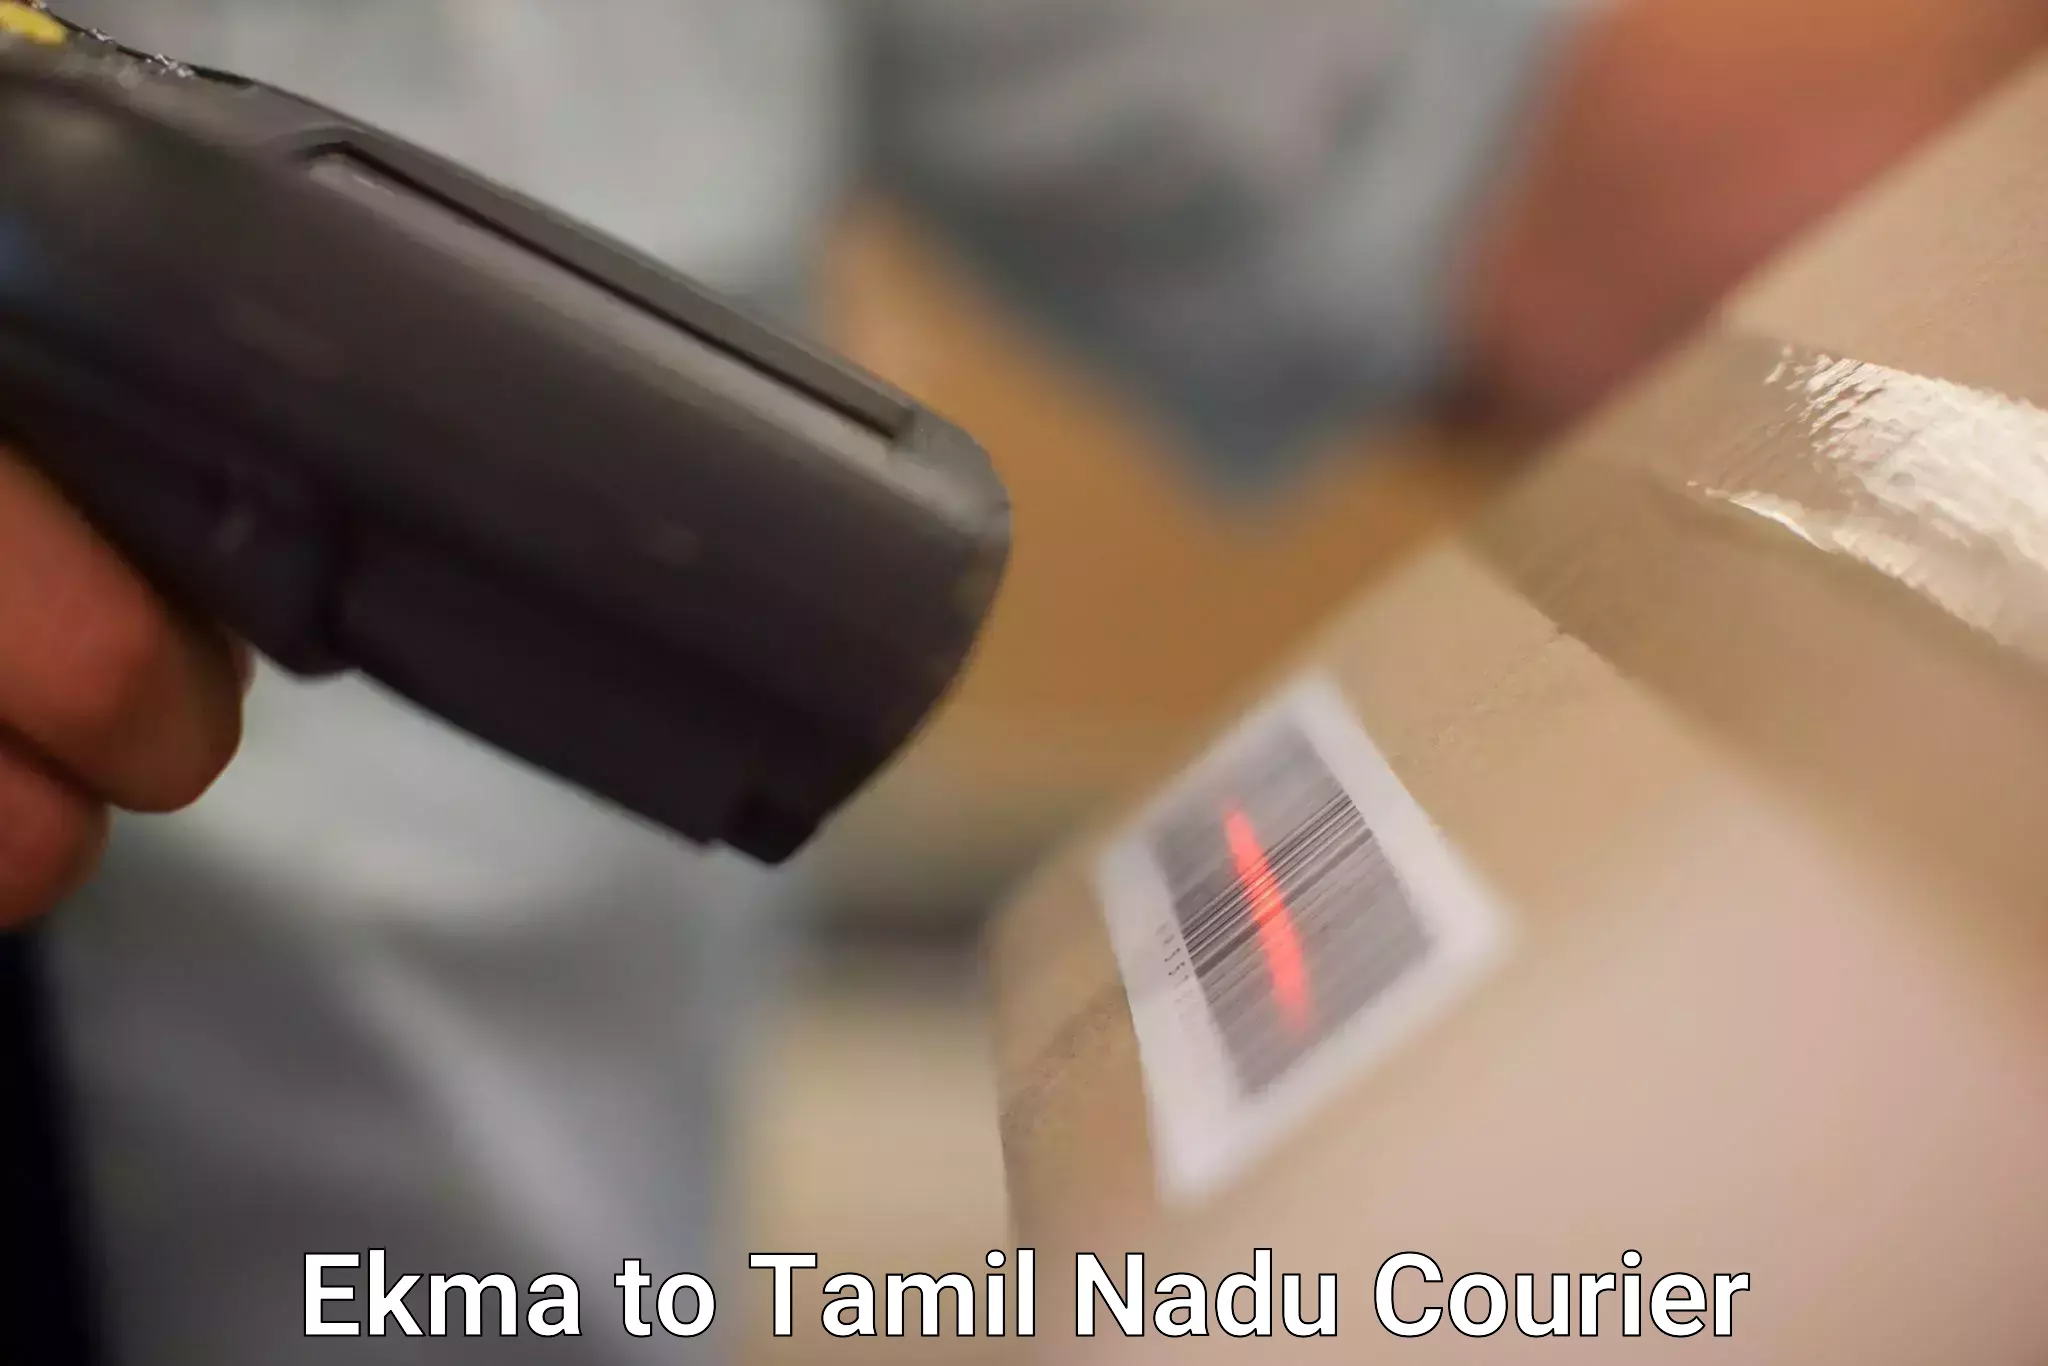 Courier app Ekma to Tamil Nadu